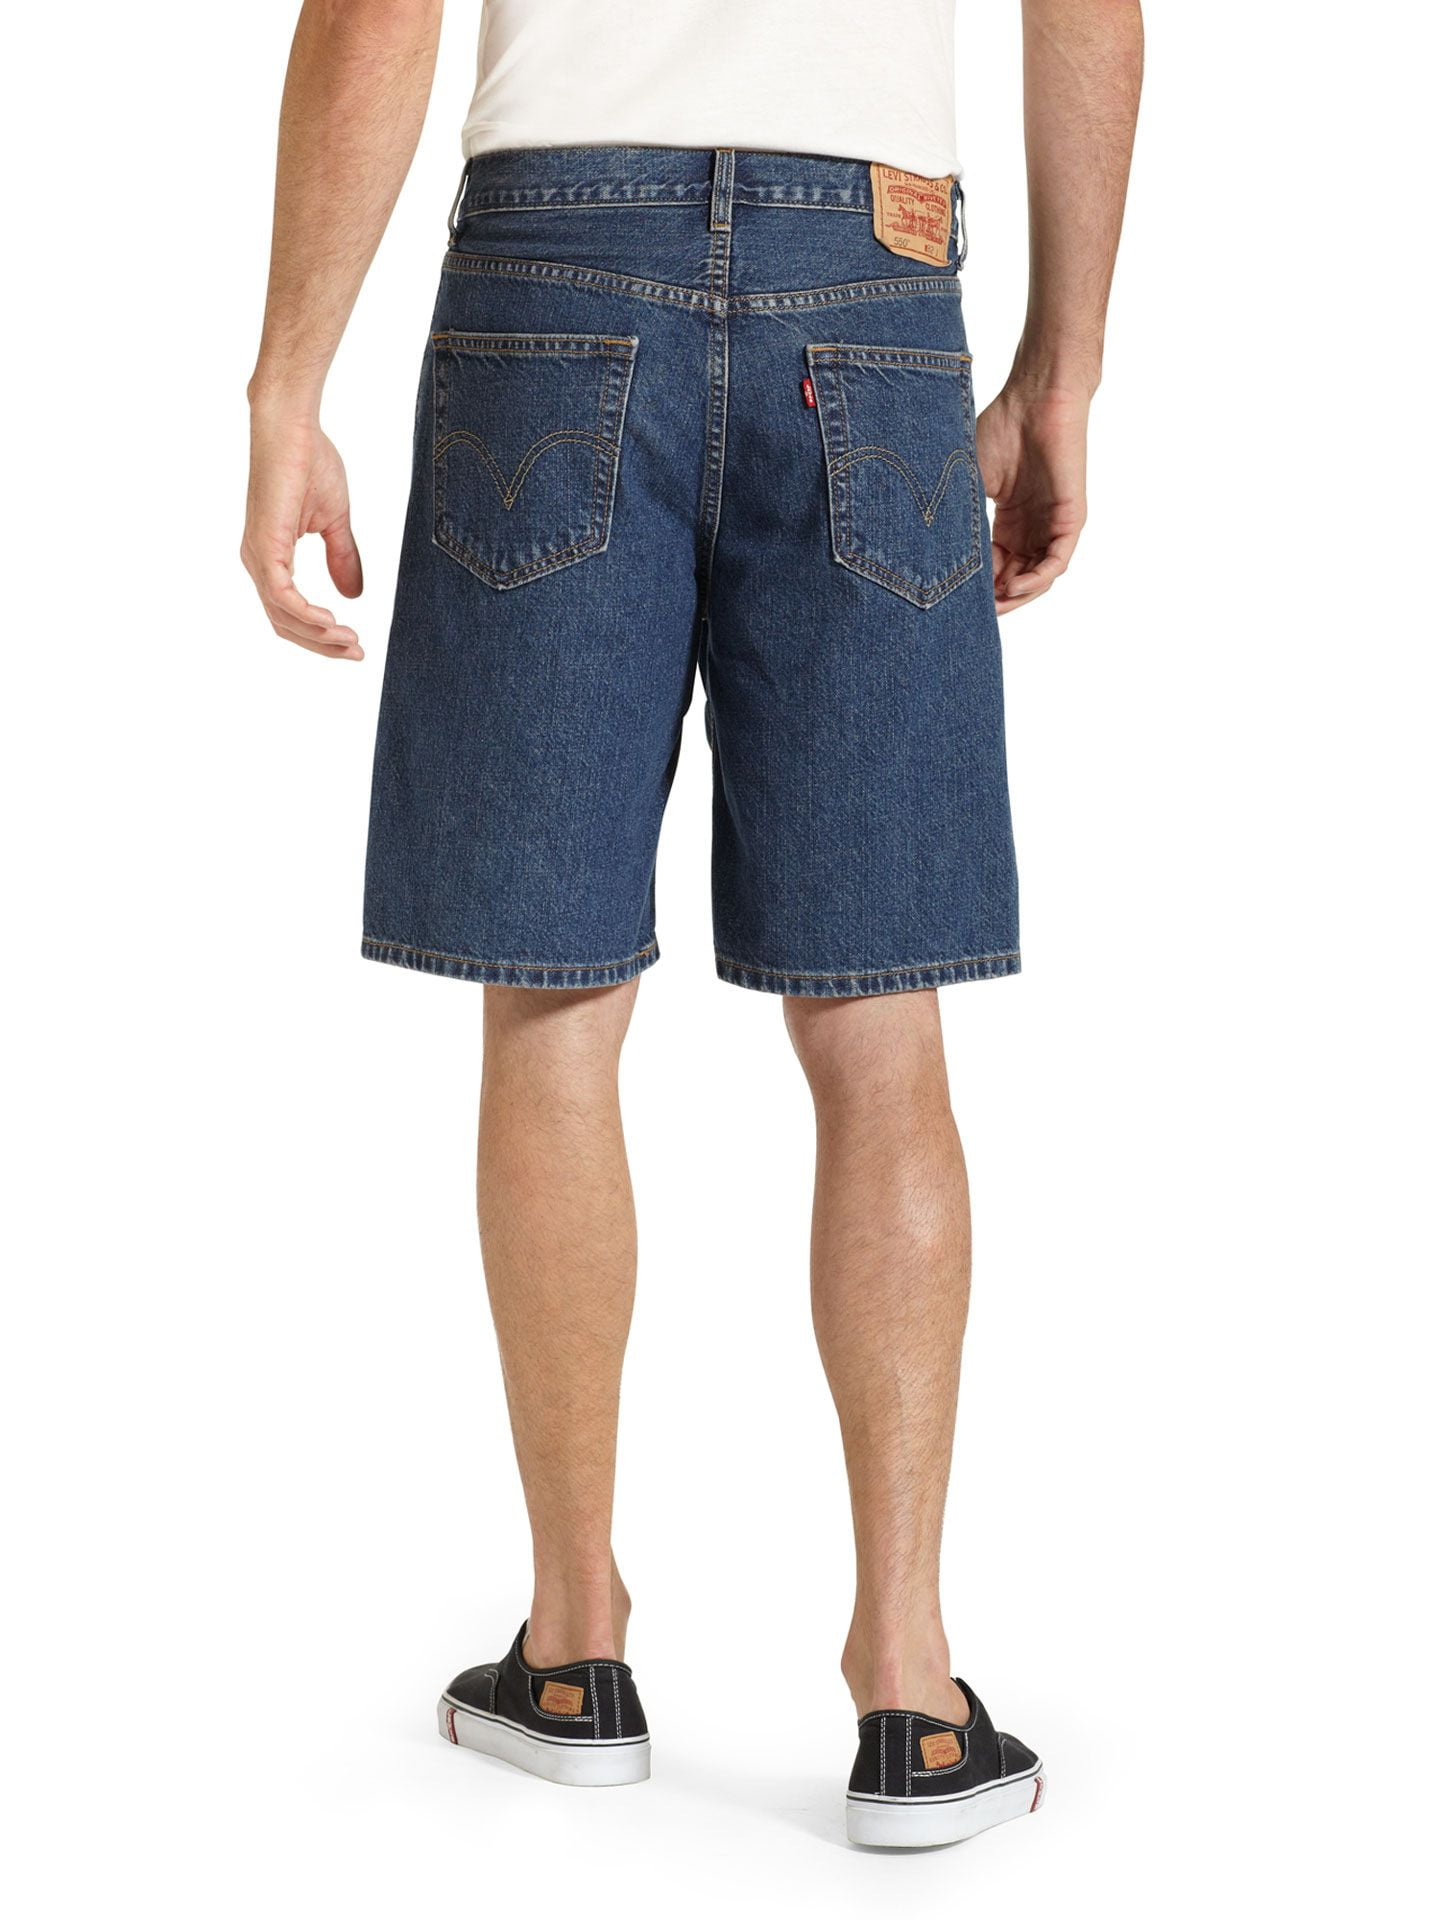 Levi's 550 Relaxed Fit Men's Shorts - Dark Stonewash, Dark Stonewash, 31 -  